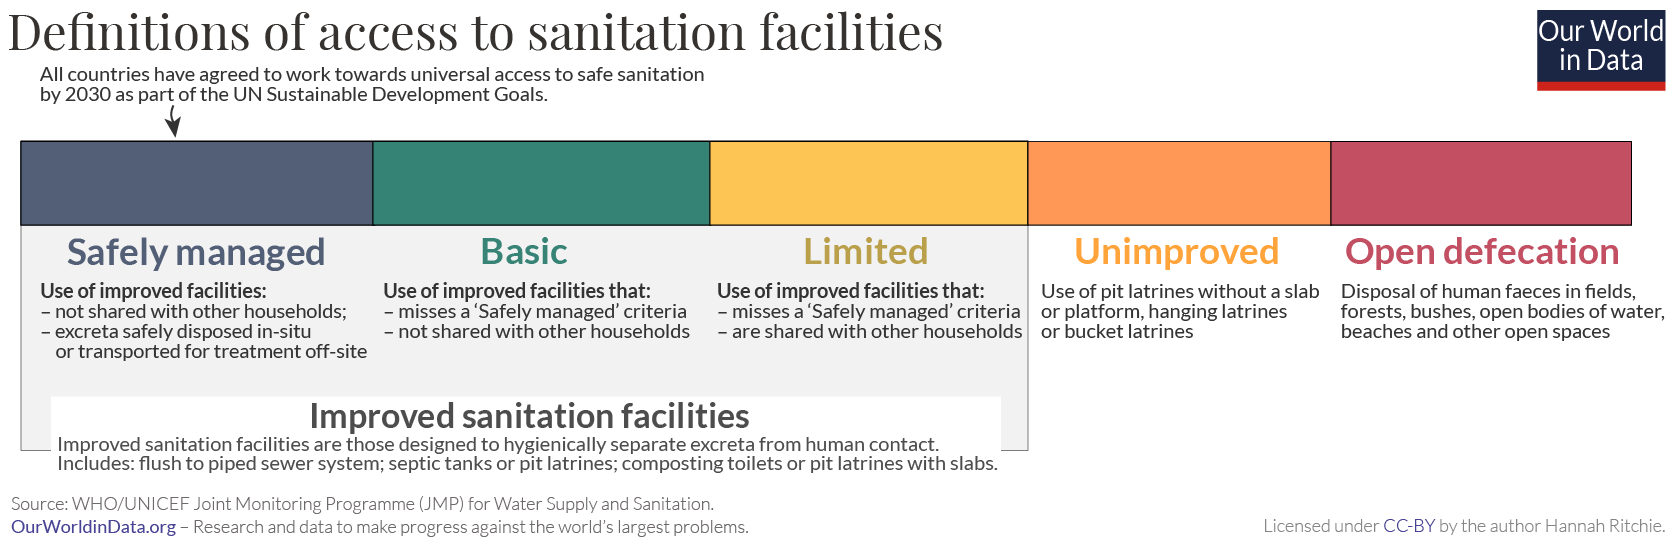 Sanitation definitions